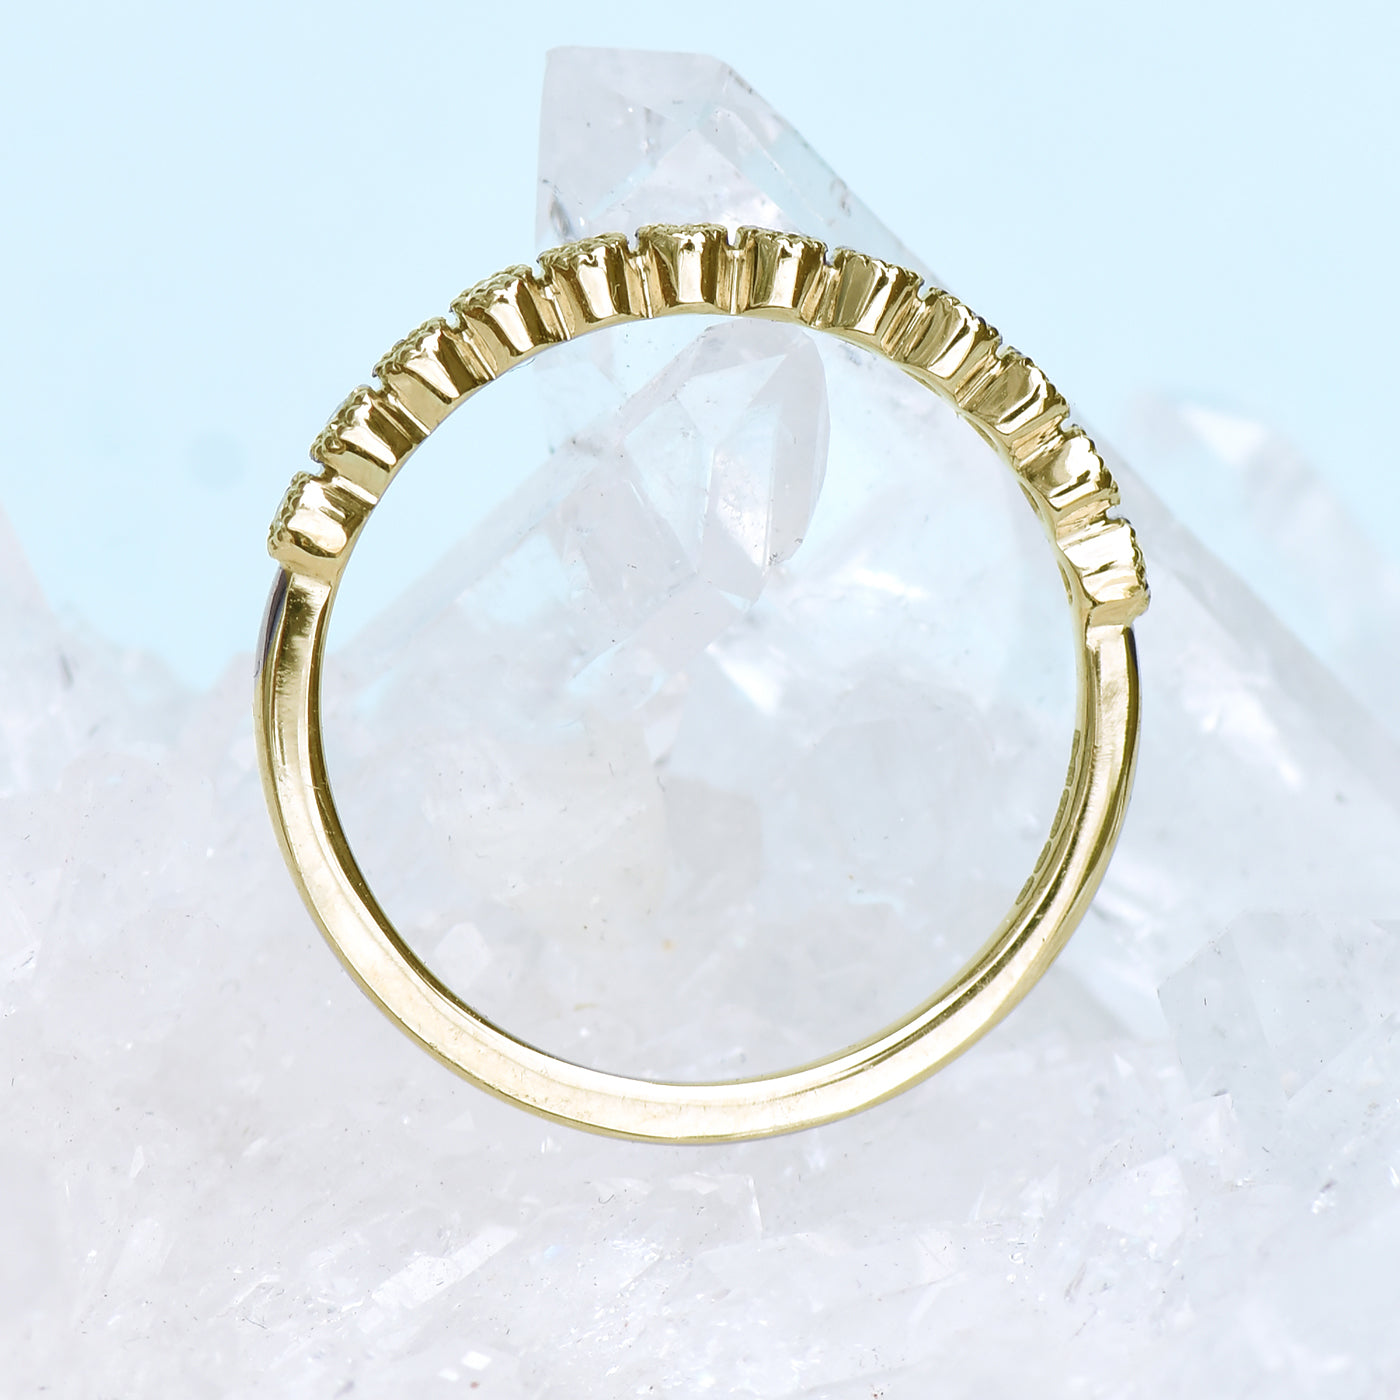 18ct Gold Ethical Diamond Eternity or Wedding Ring (Size J 1/2)